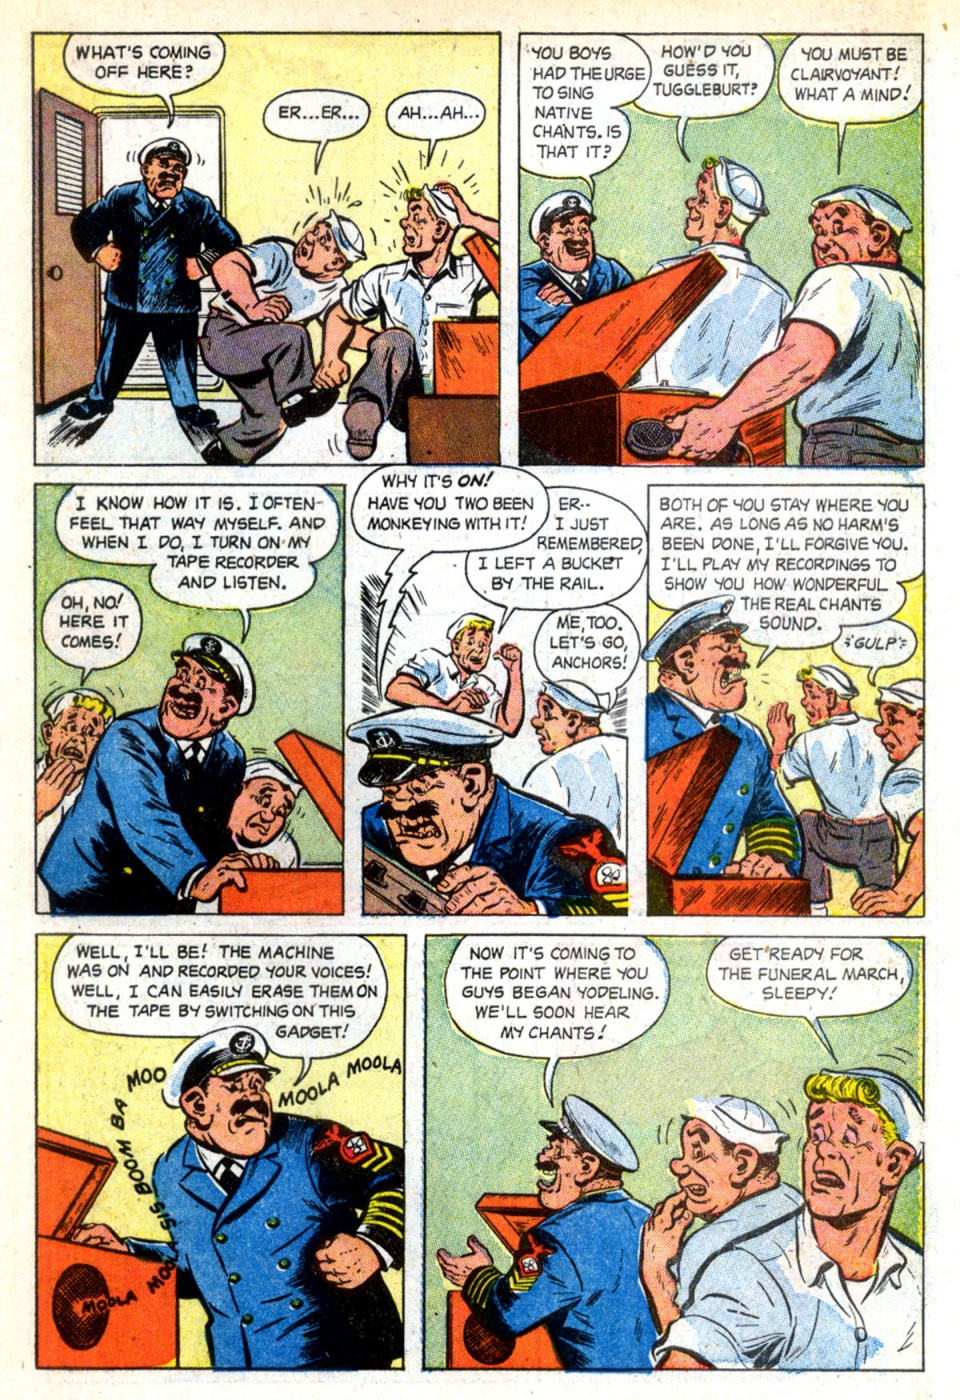 Anchors the Salt Water Daffy - Comics (b) (31)